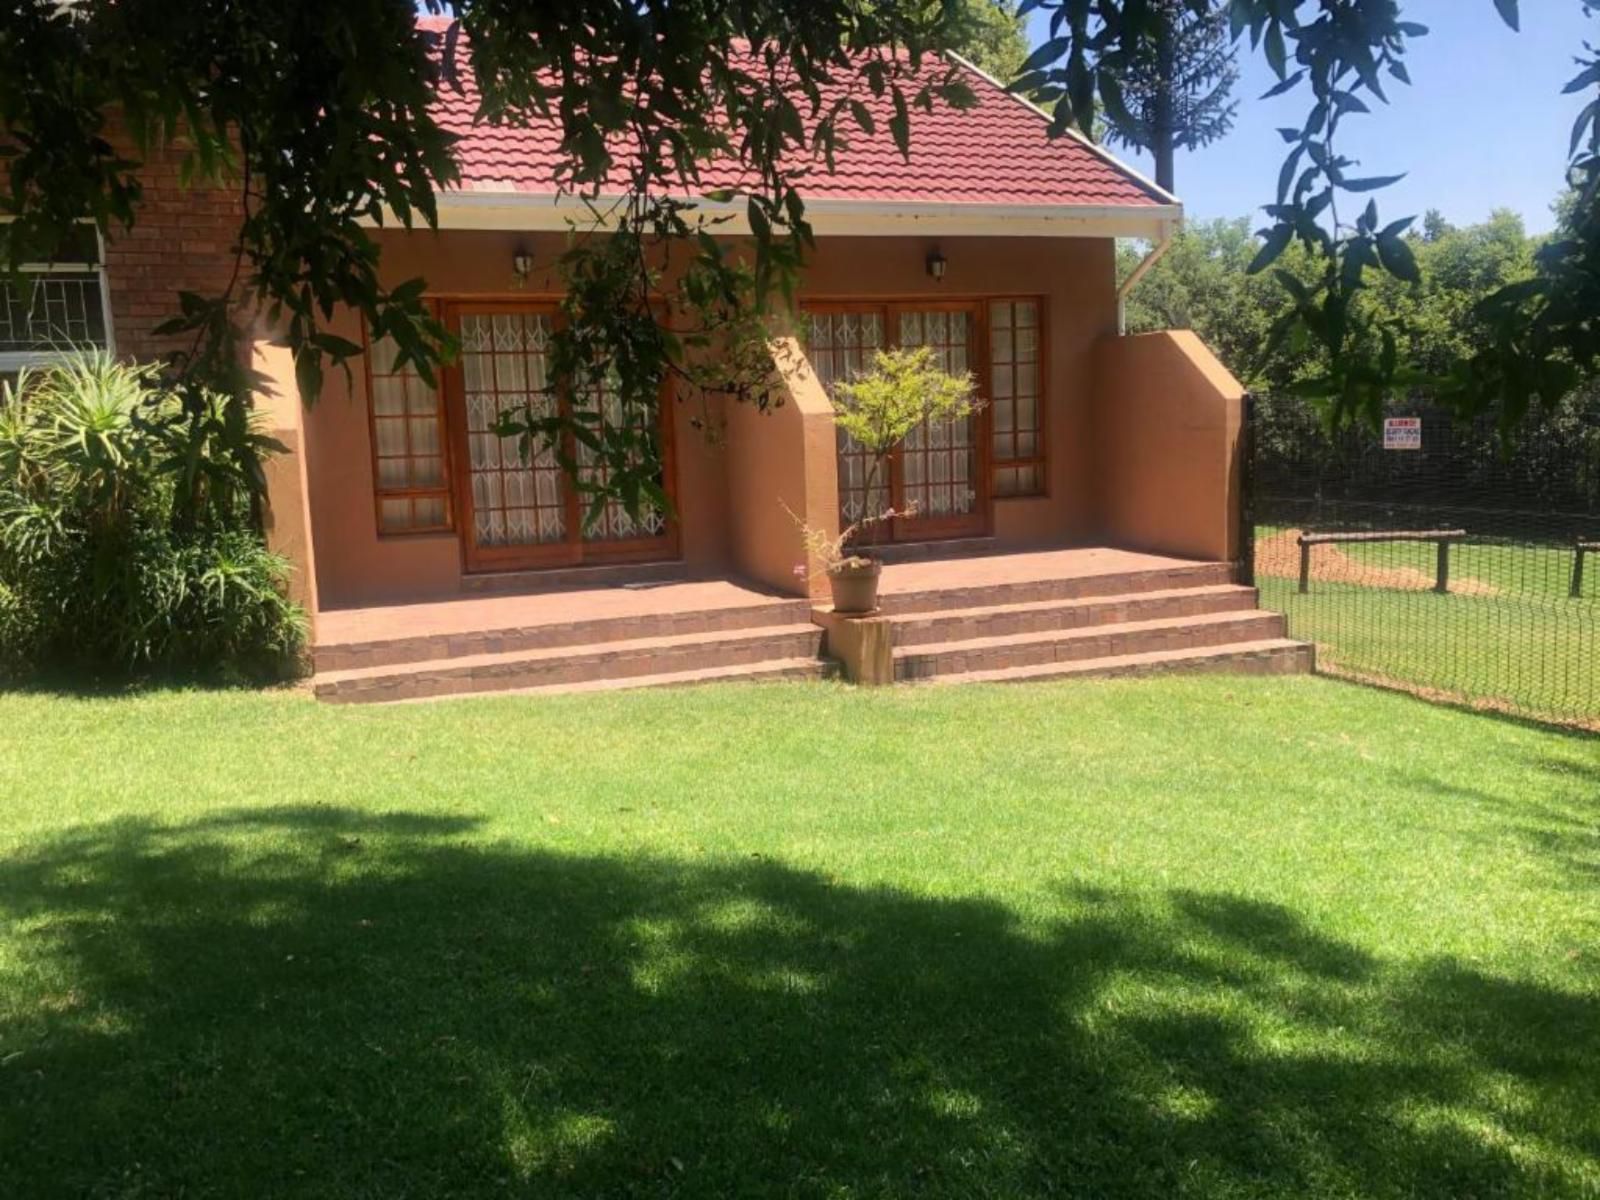 Duke S Place Nature Guesthouse Halfway Gardens Johannesburg Gauteng South Africa House, Building, Architecture